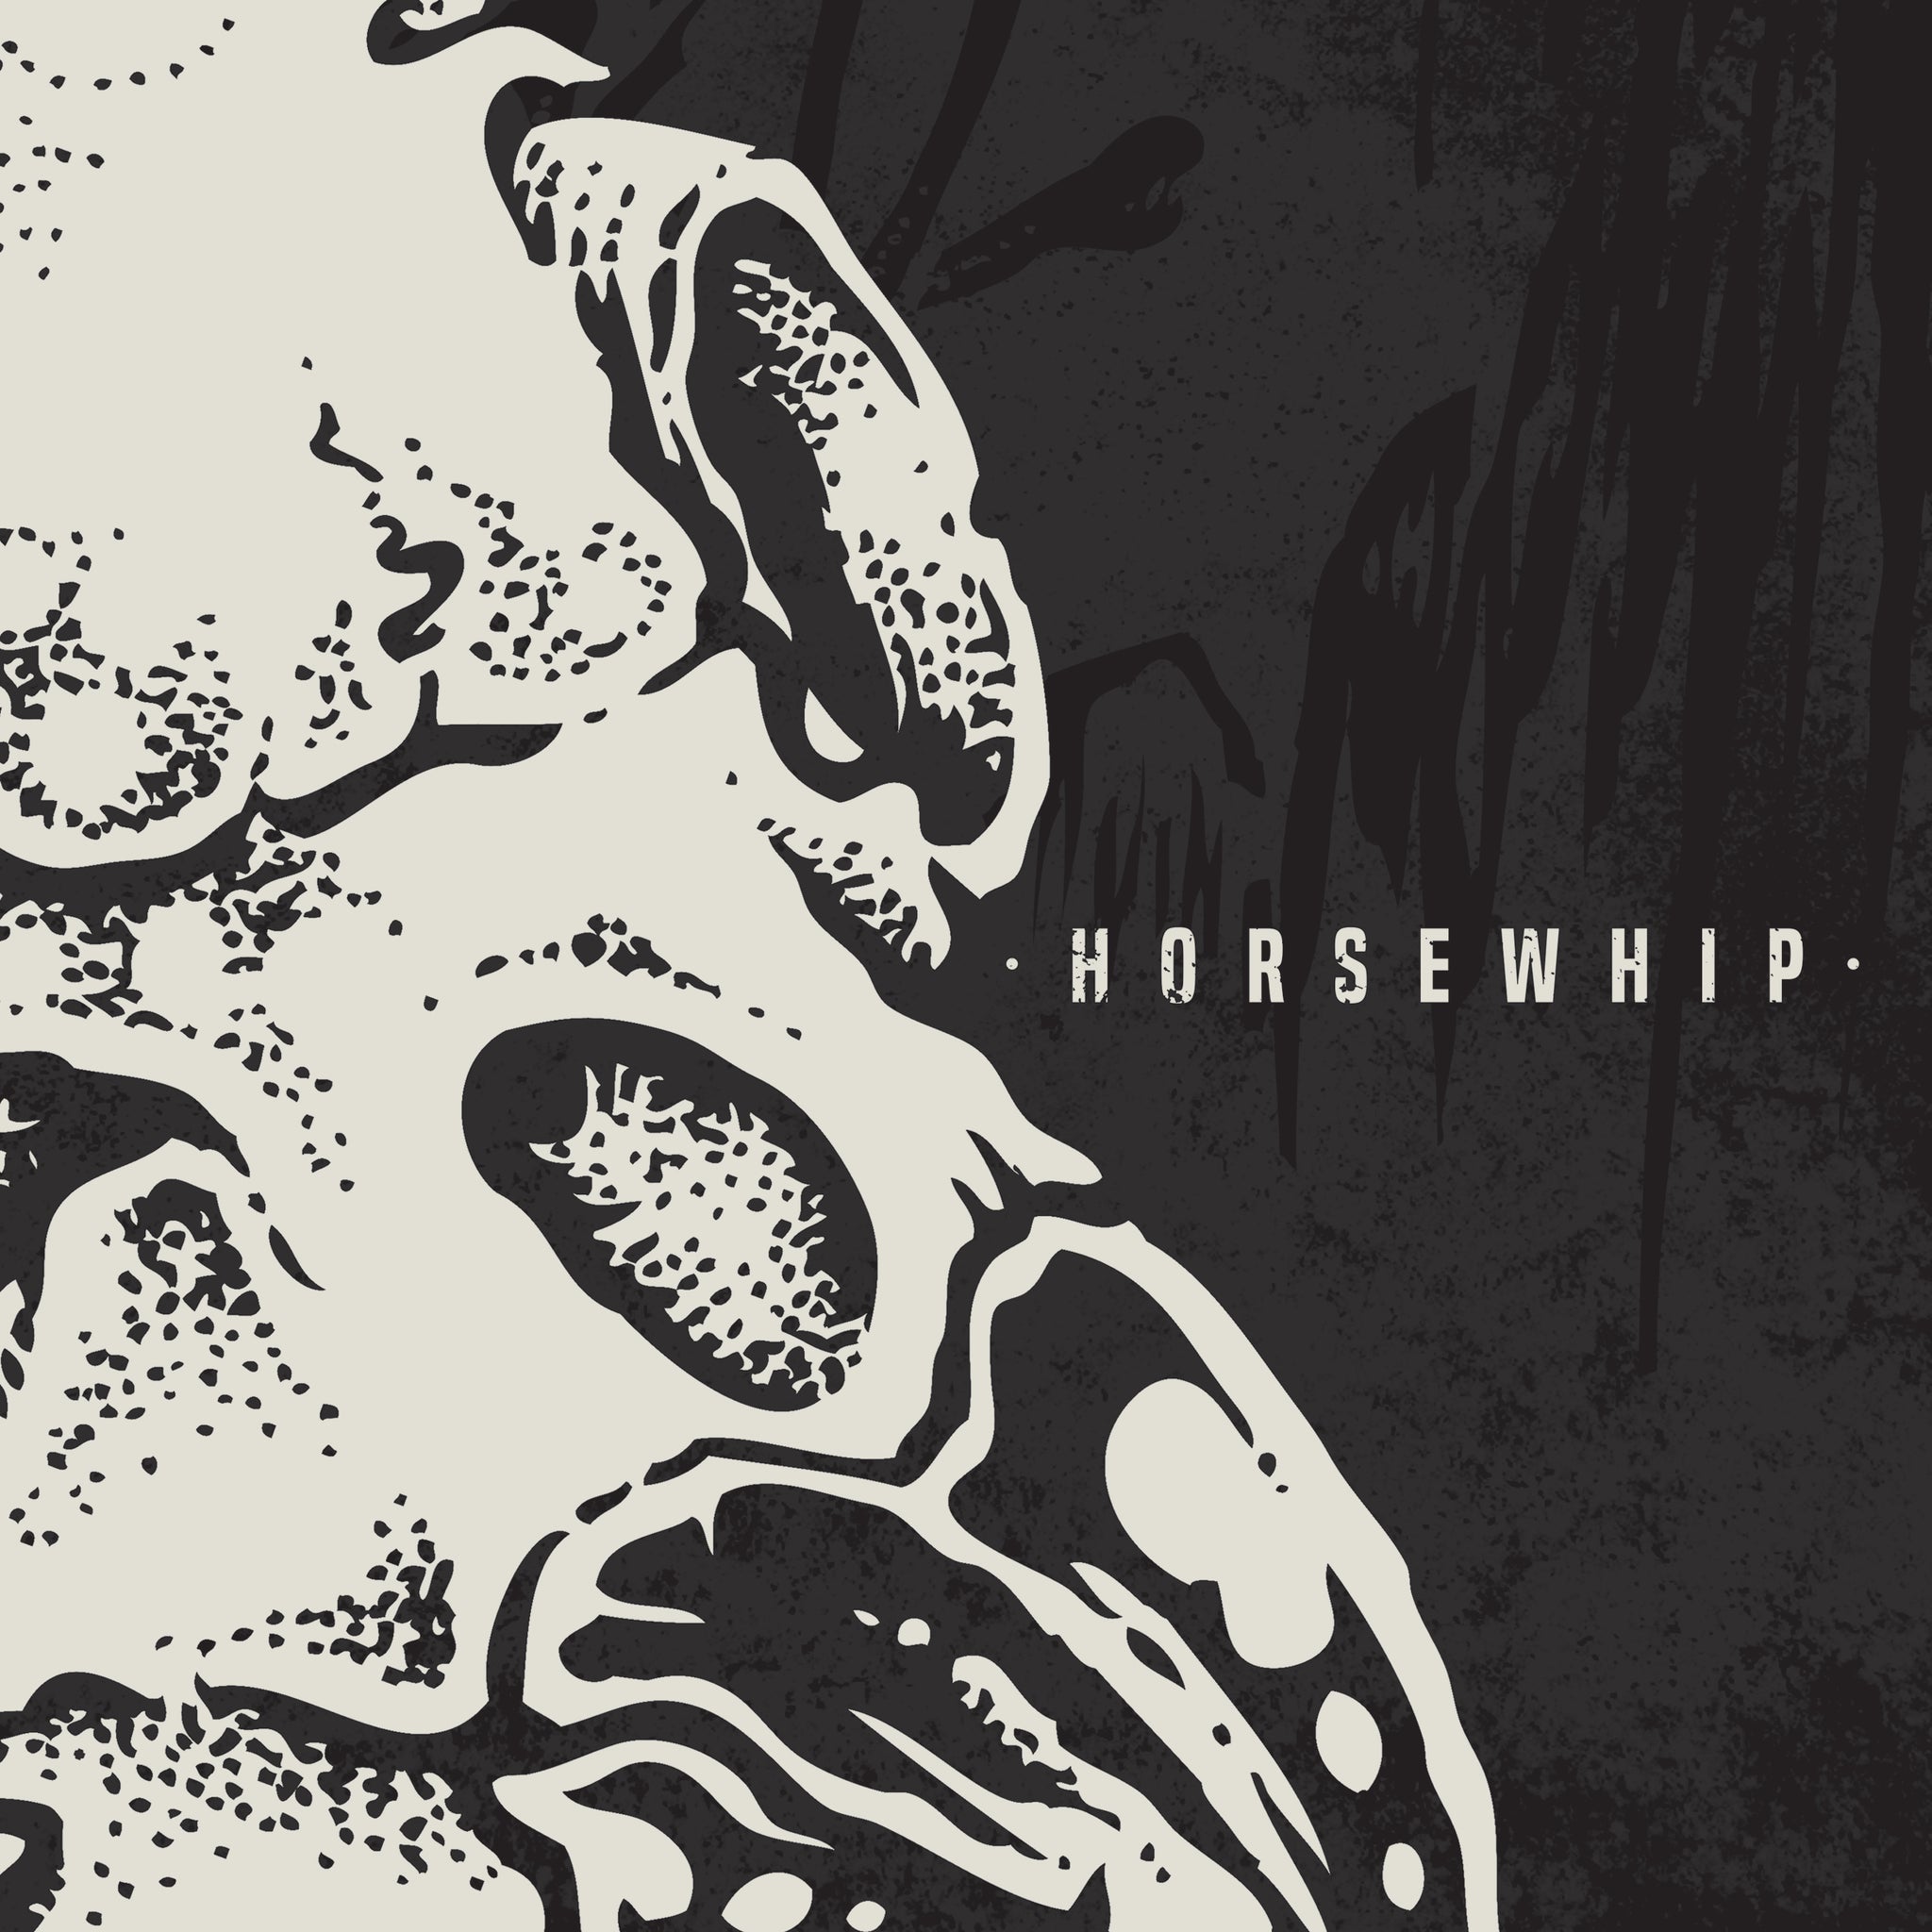 Horsewhip "s/t" LP